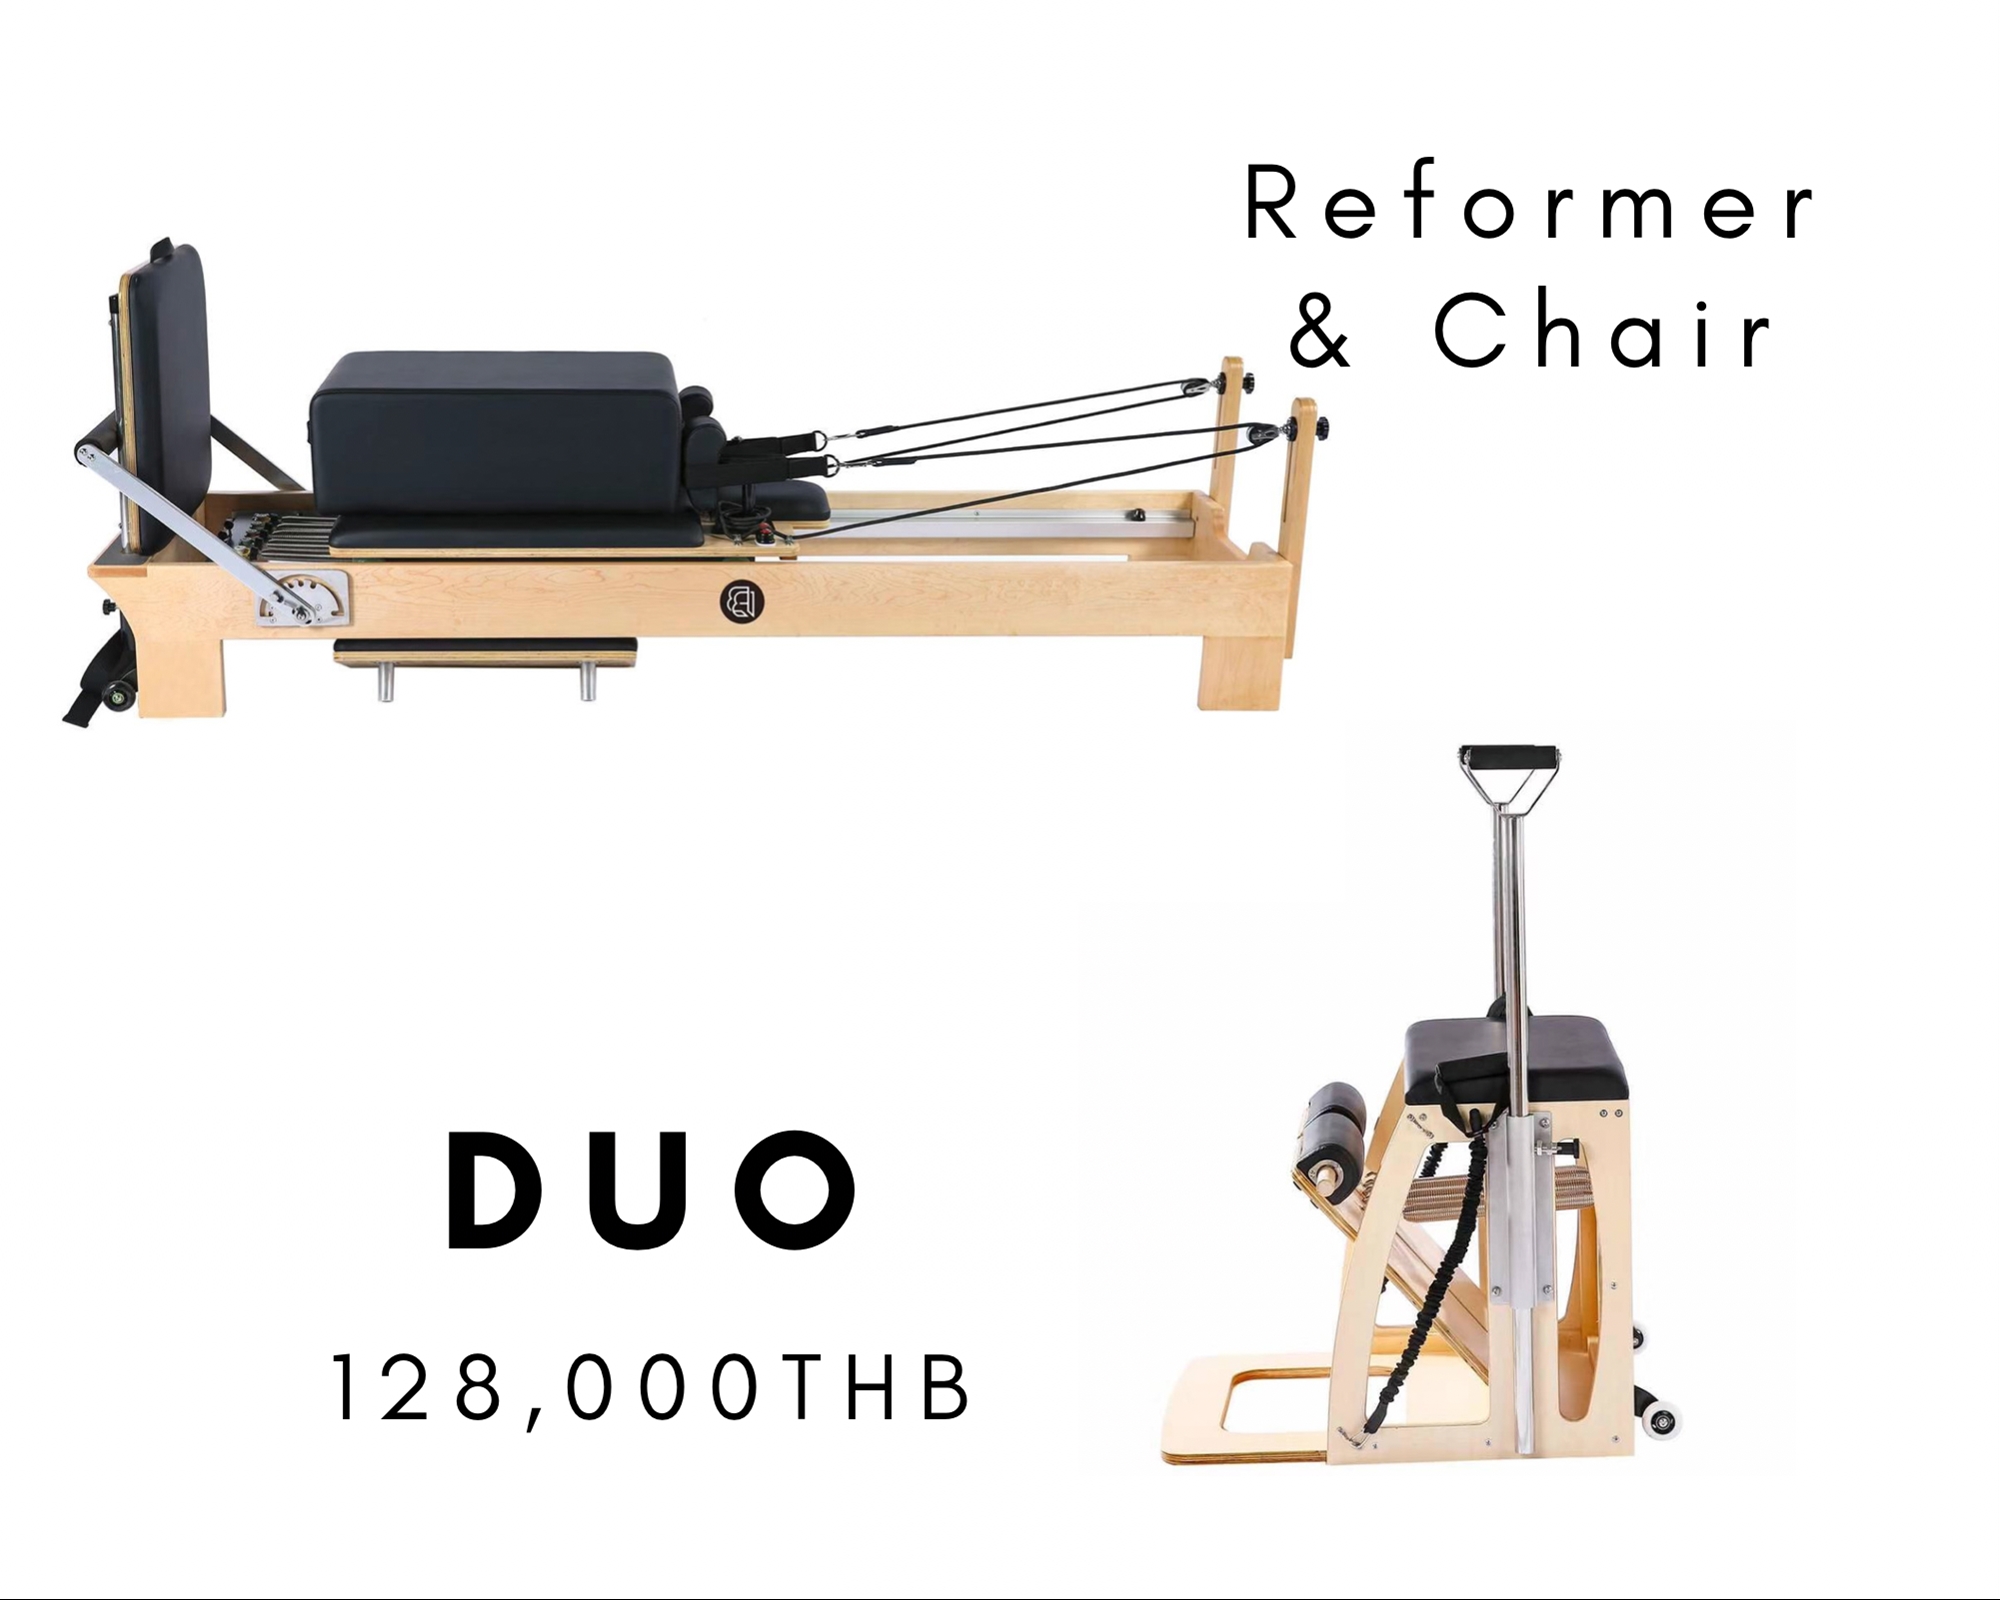 Pro 08 Reformer Chair